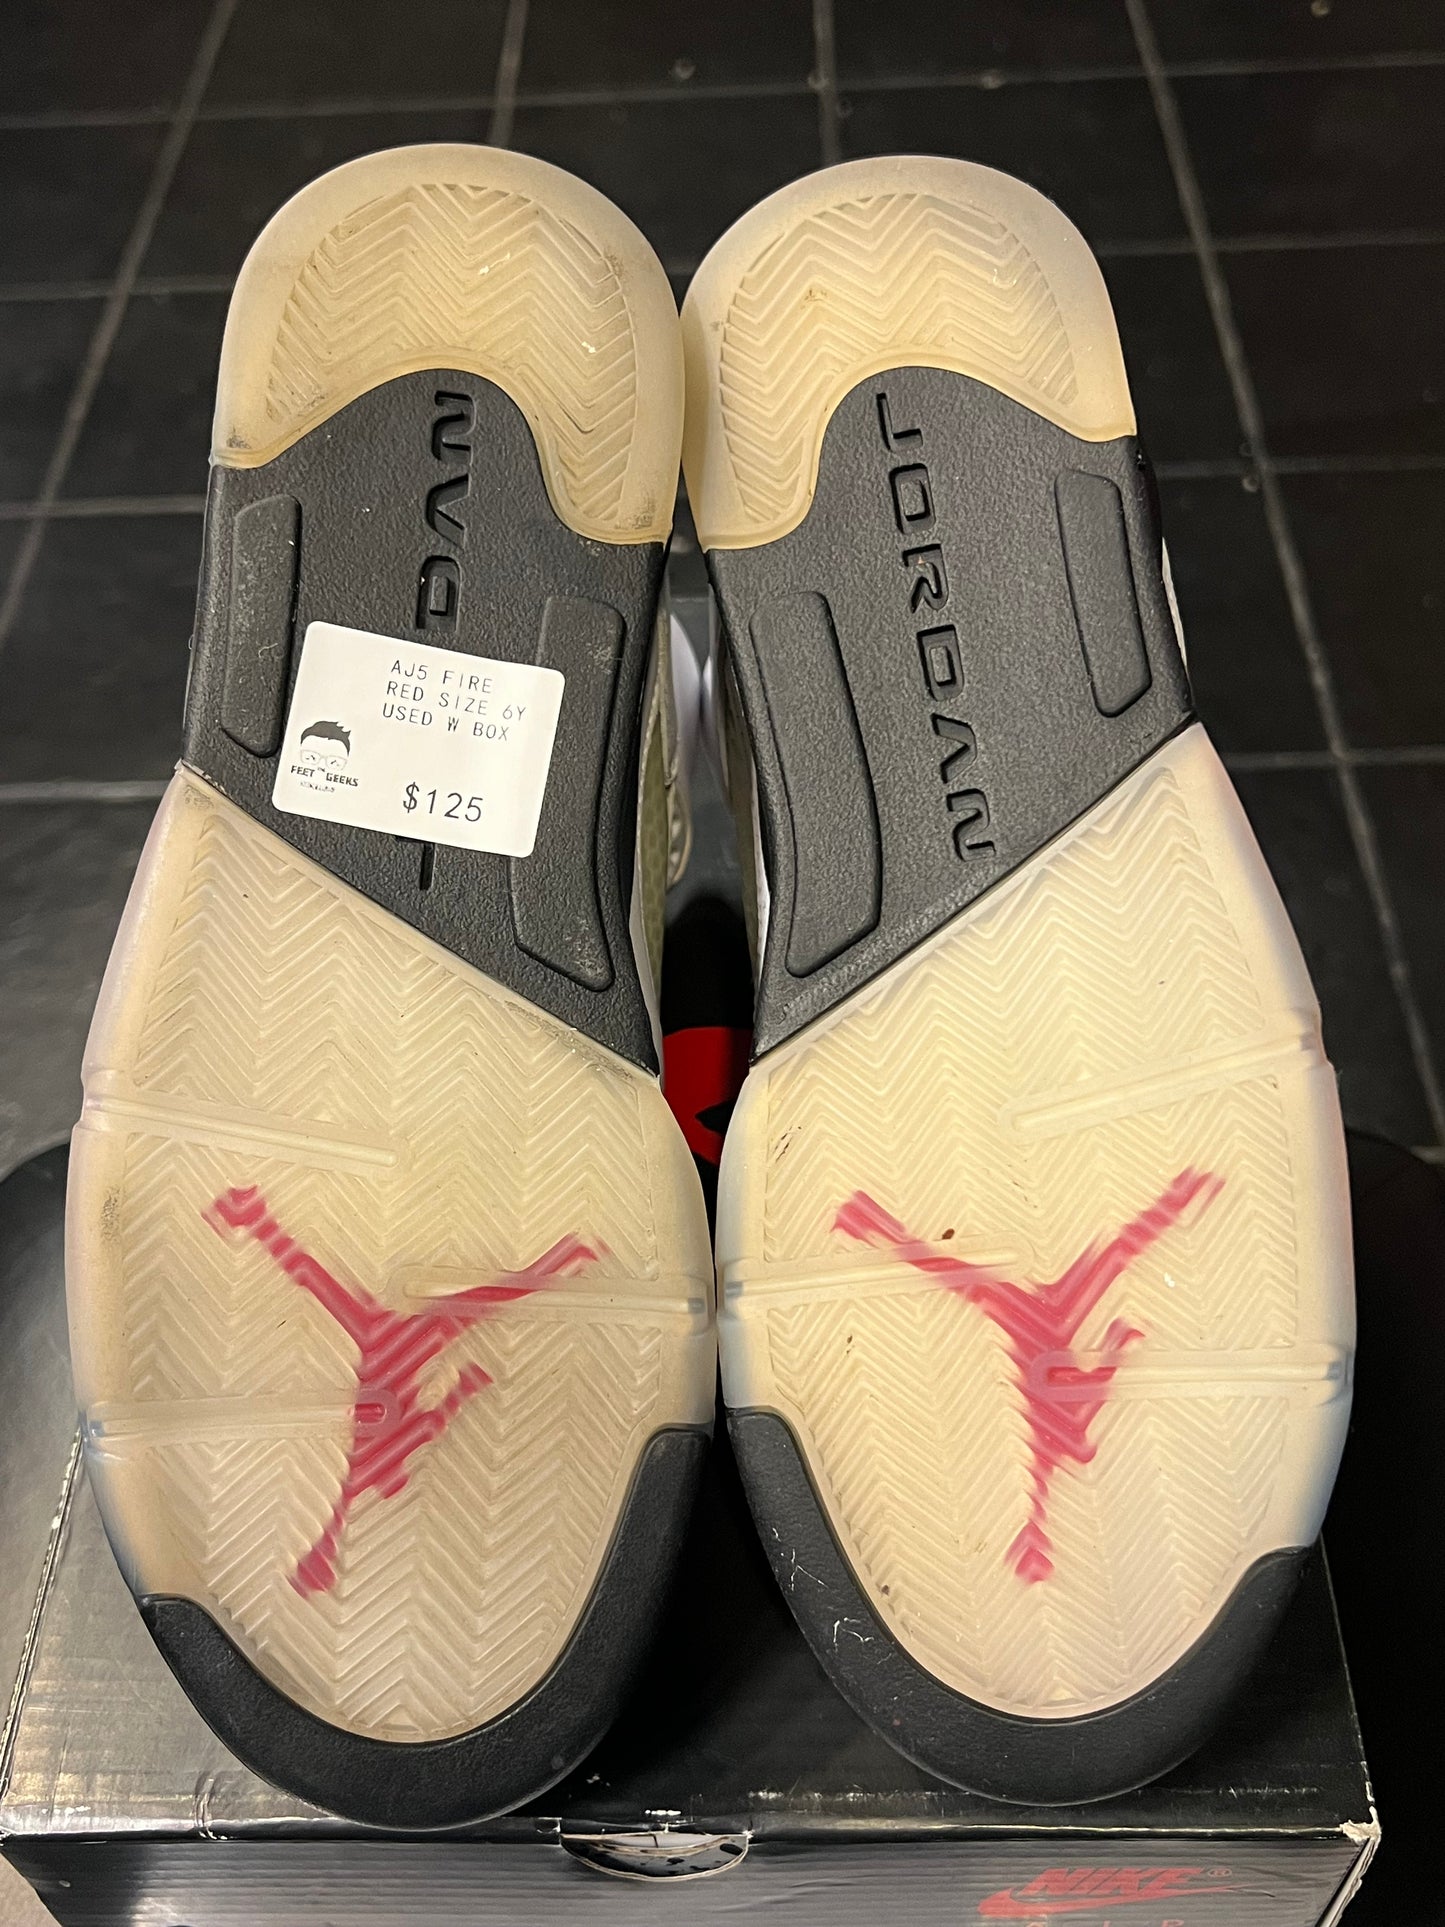 Pre Owned Air Jordan 5 Retro Fire Red Size 6y gs gradeschool shoes